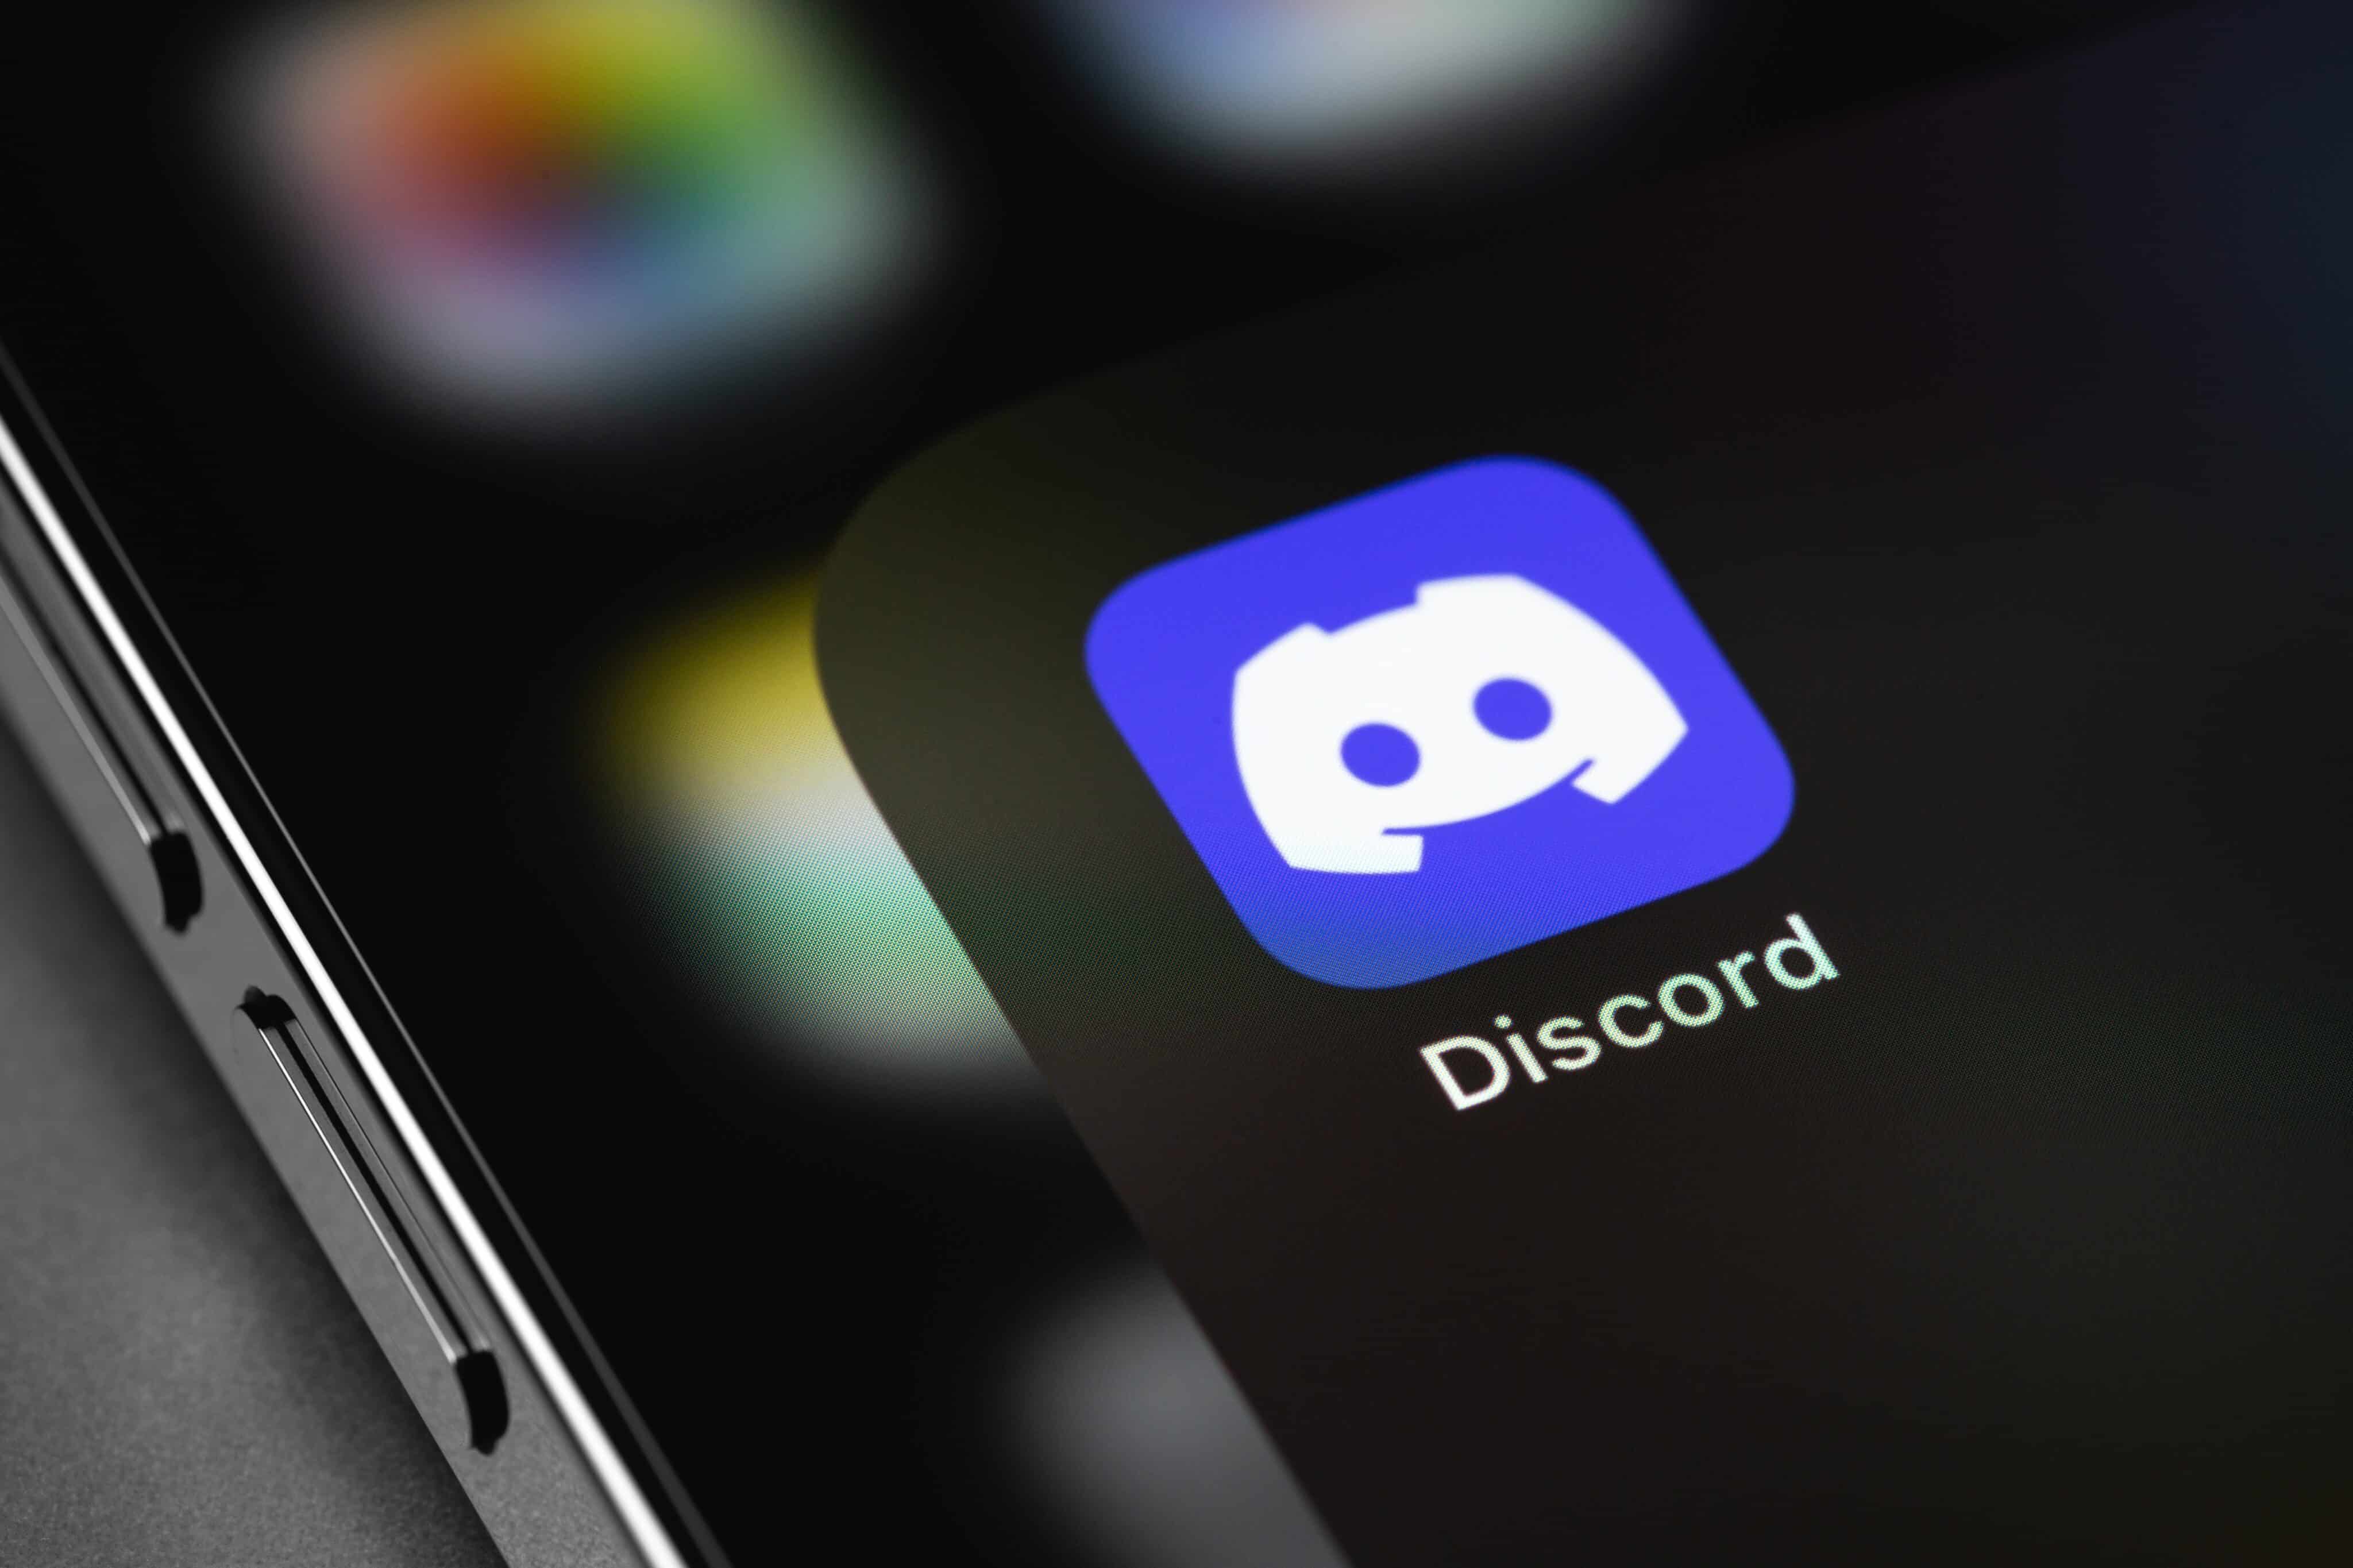 Discord - Converse & Fale na App Store